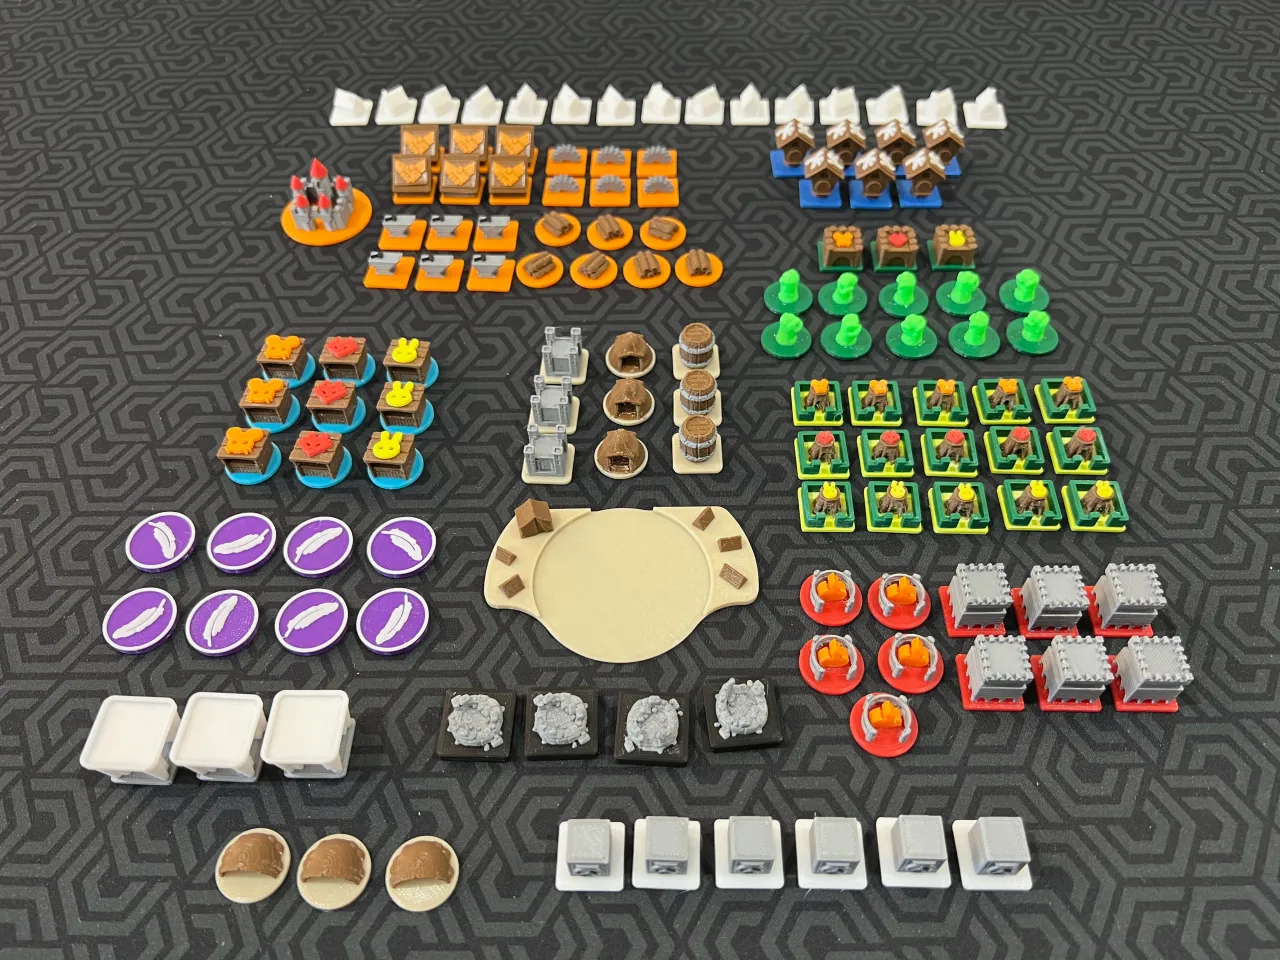 board game pieces printable